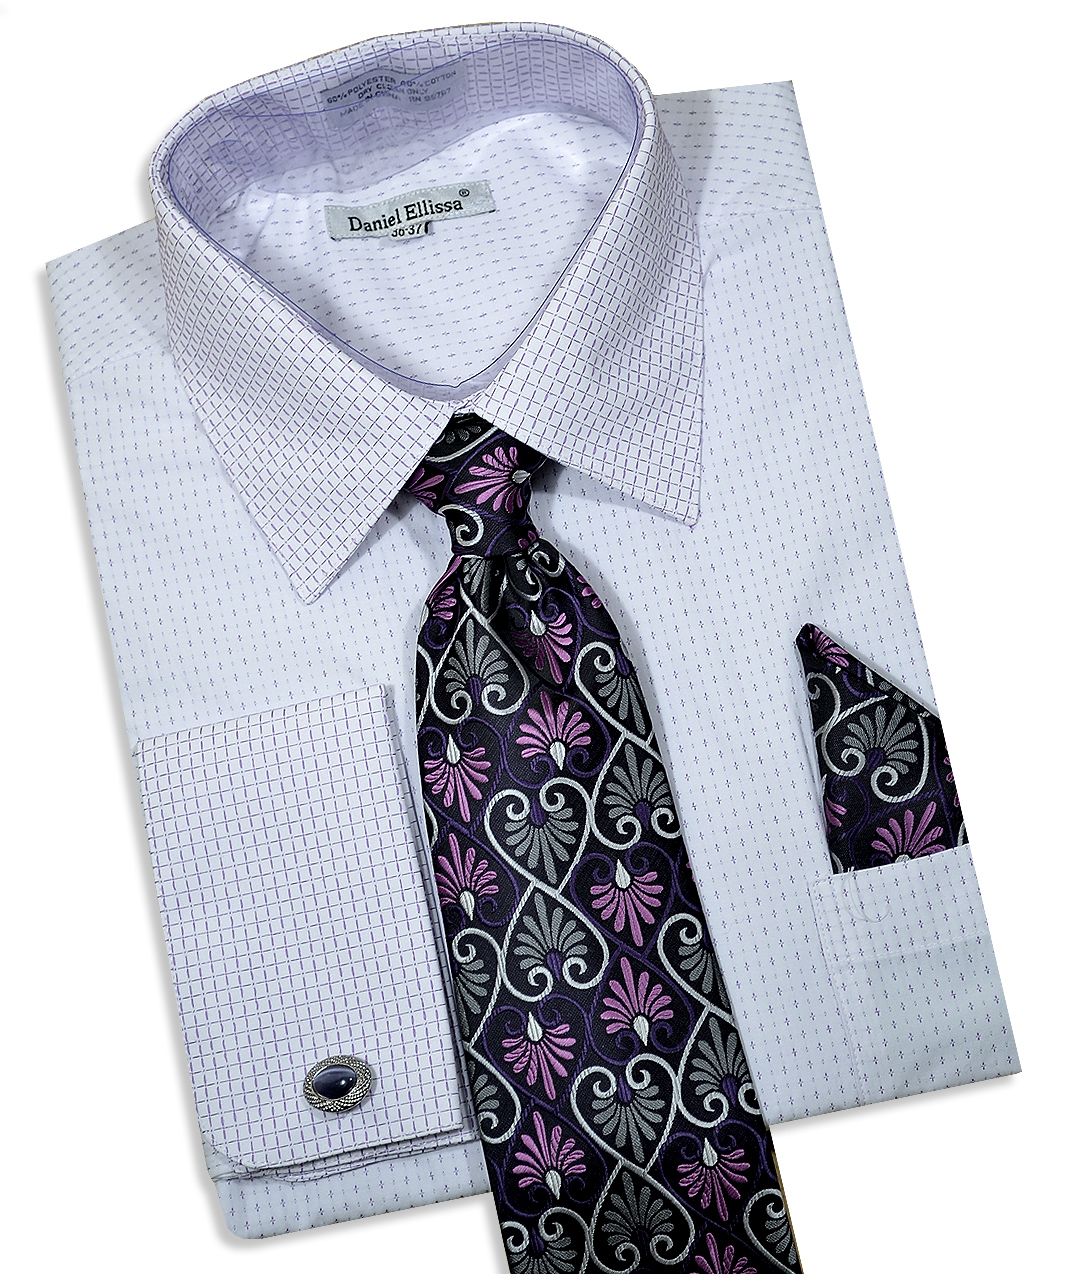 Daniel Ellissa Lilac / White Contrast Pattern Dress Shirt / Tie / Hanky / Cufflinks Set DS3792P2